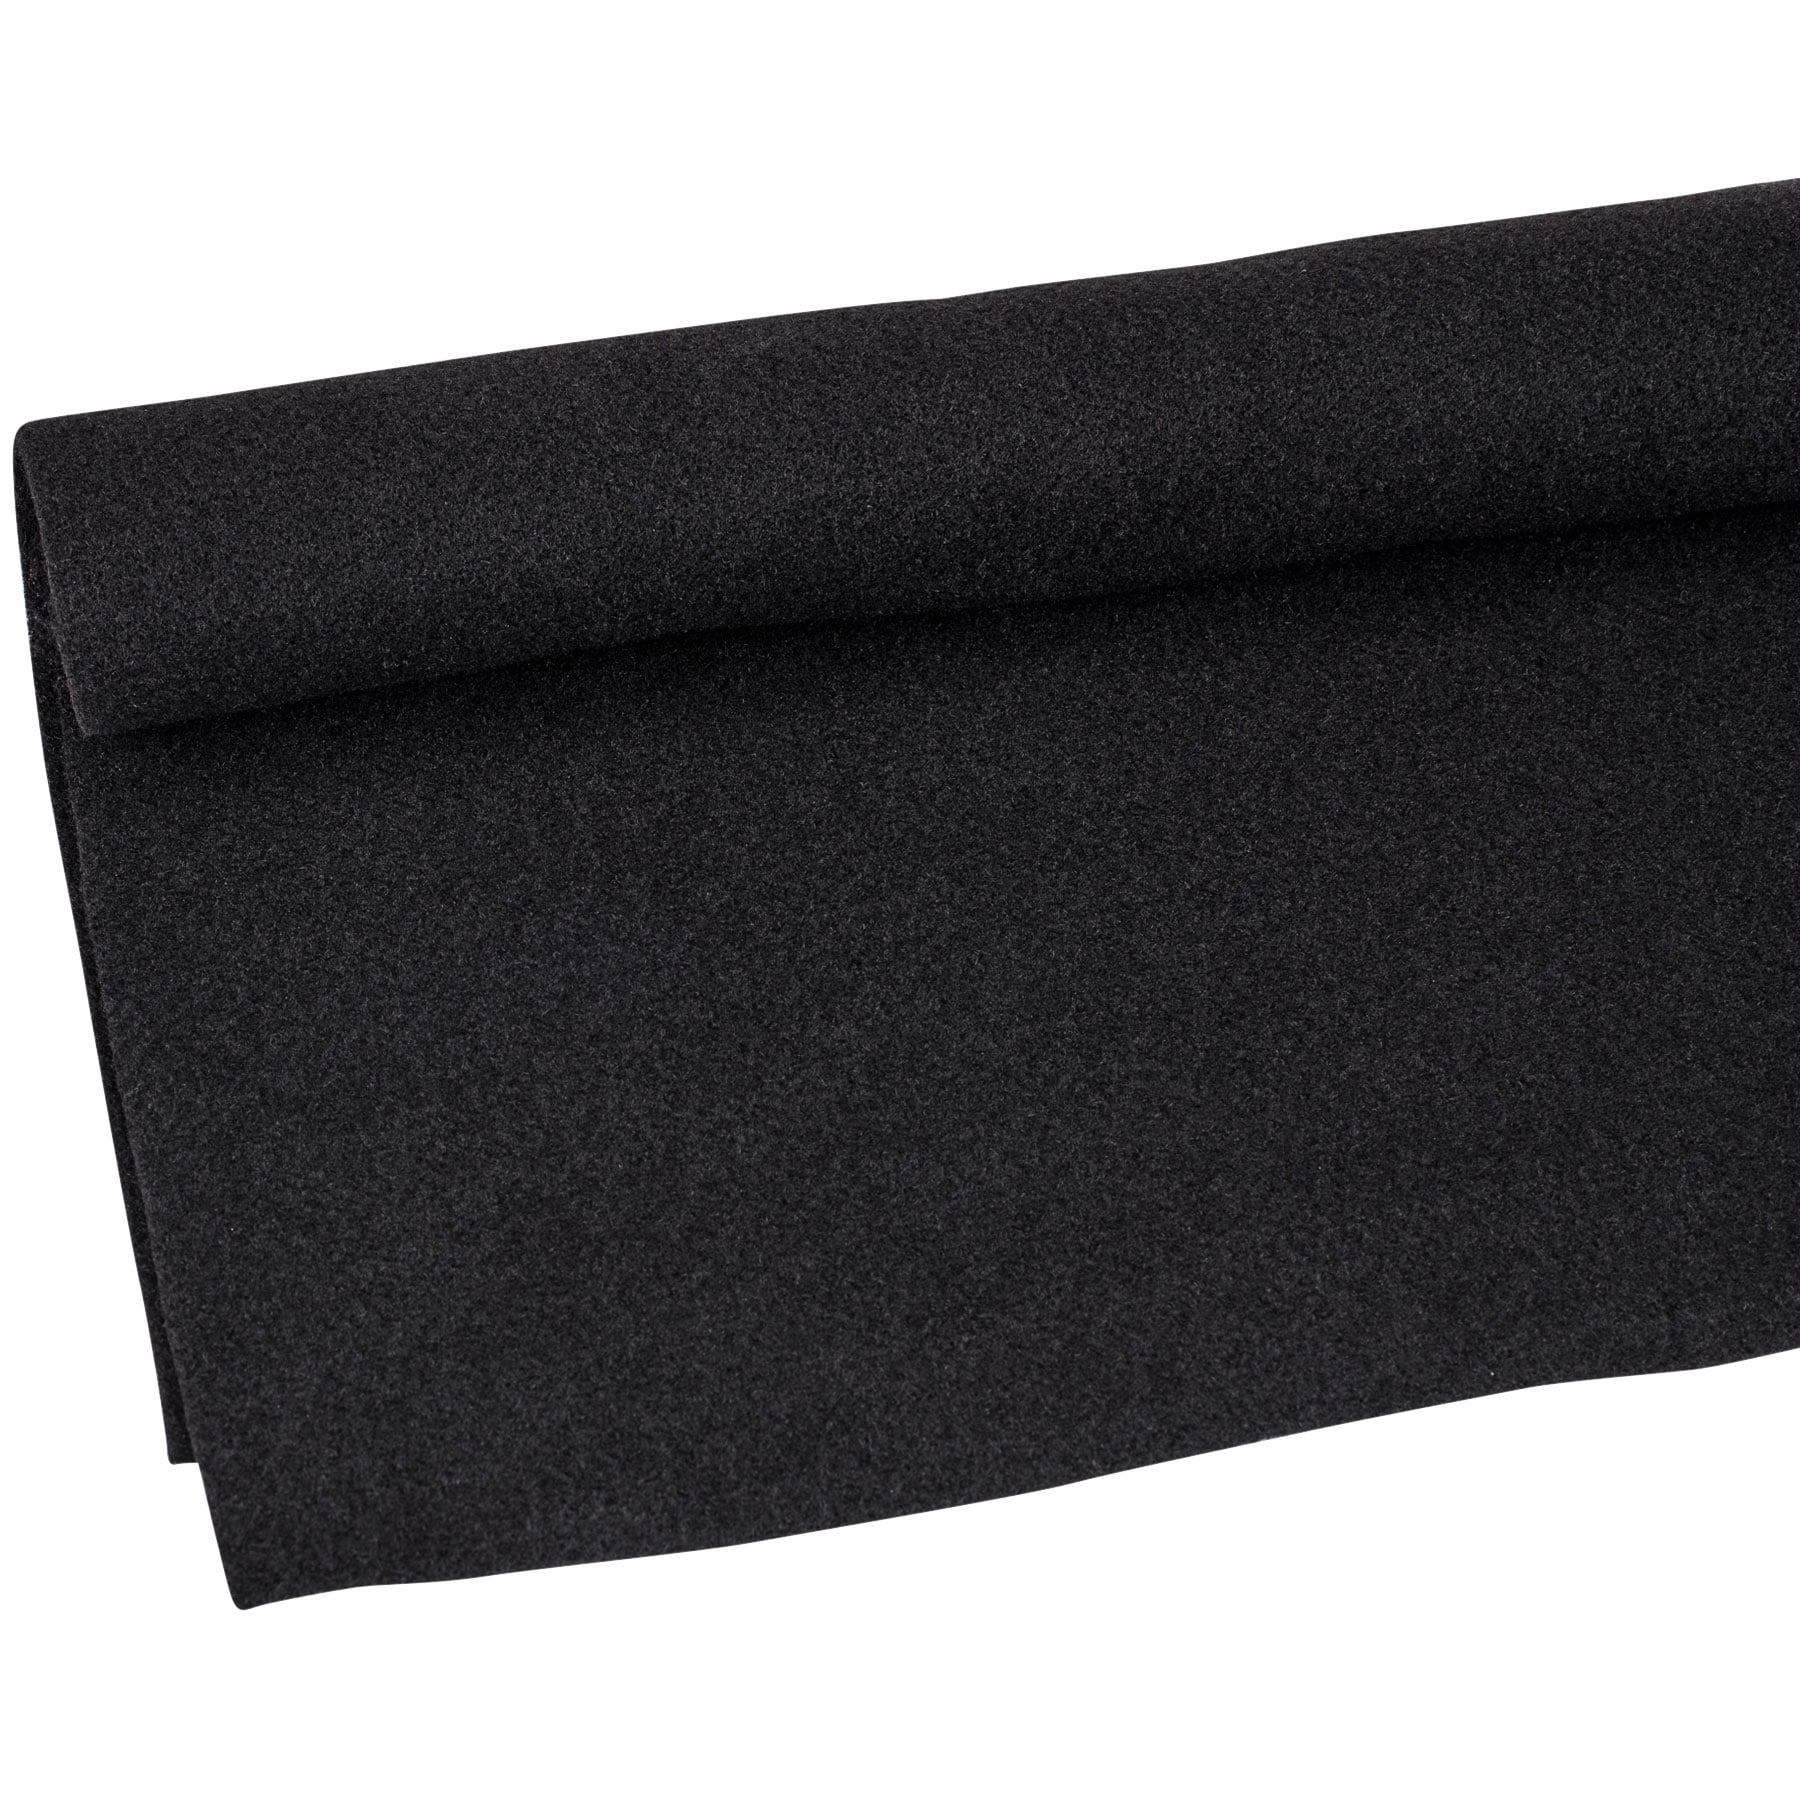 NVX 32 Square Feet Black Subwoofer Box/Trunk Liner Carpet with Adhesive Back 